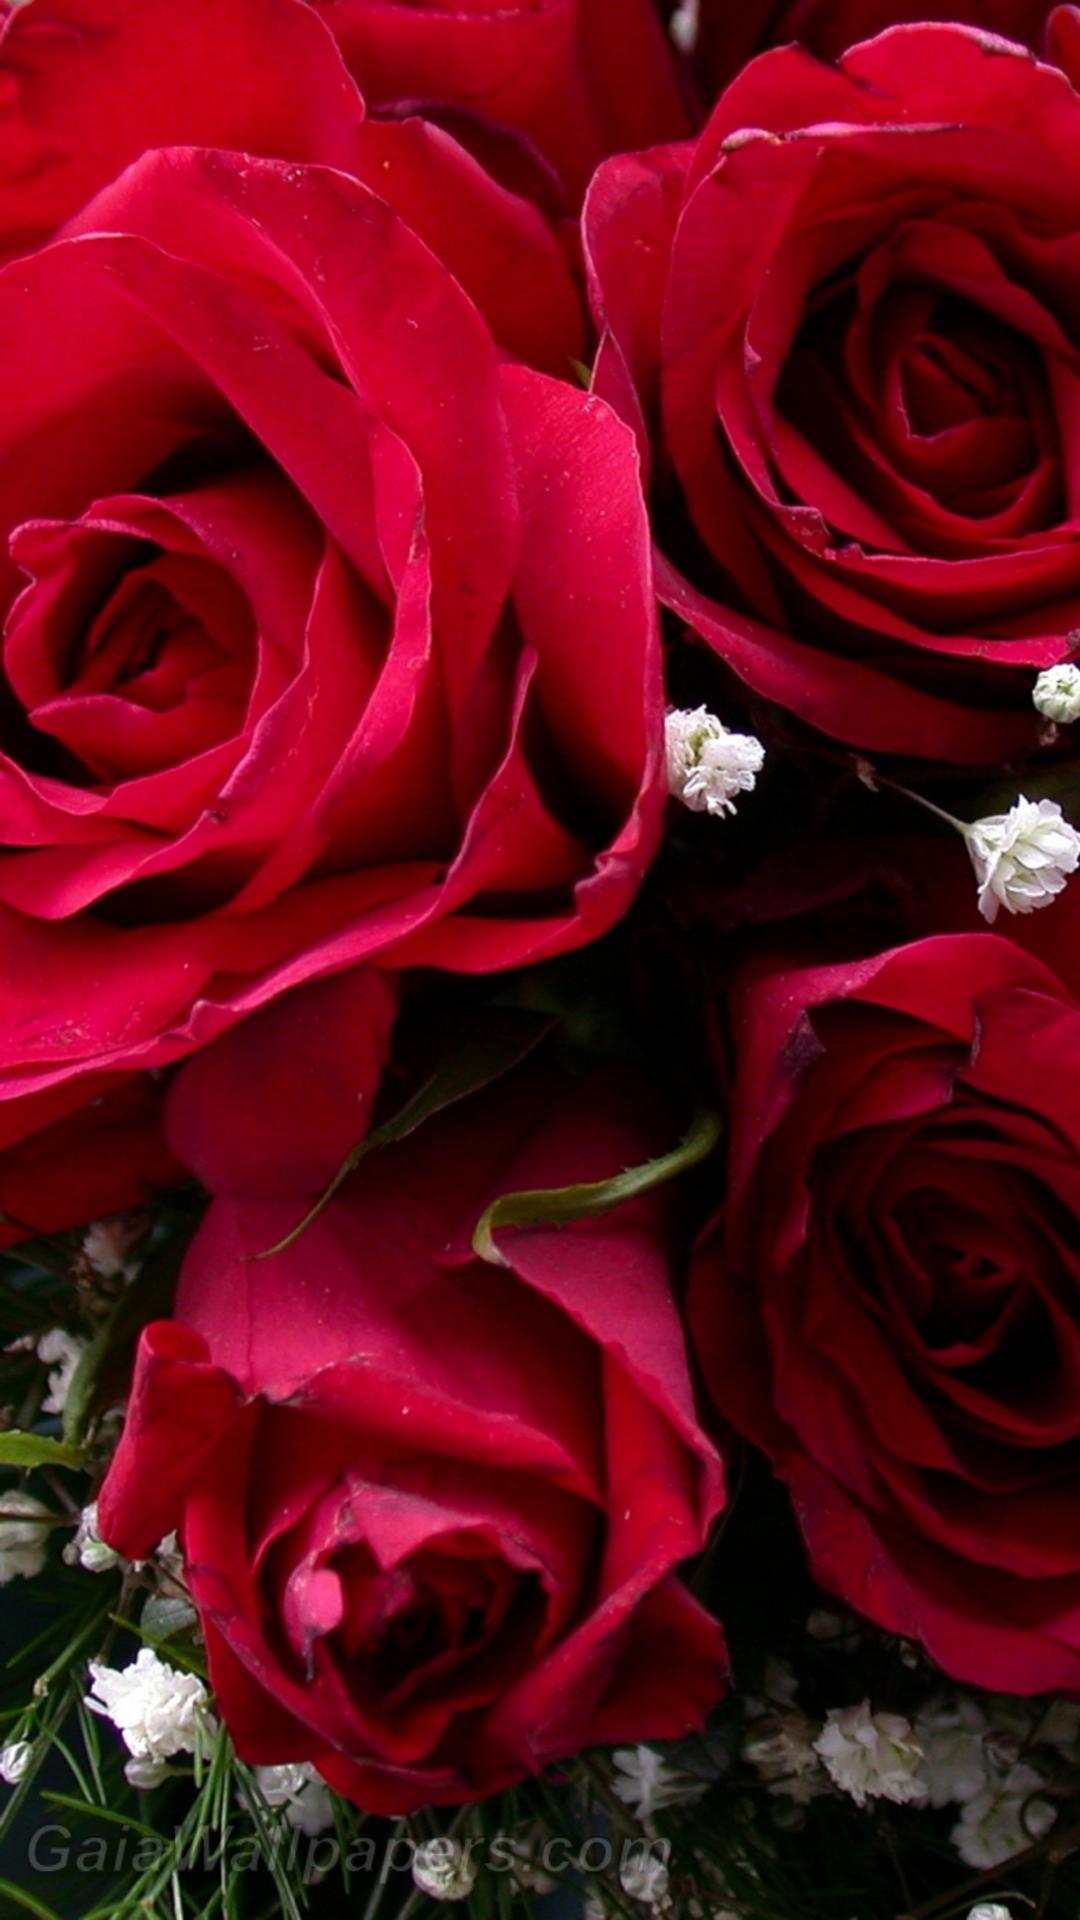 Red roses - Free desktop wallpapers